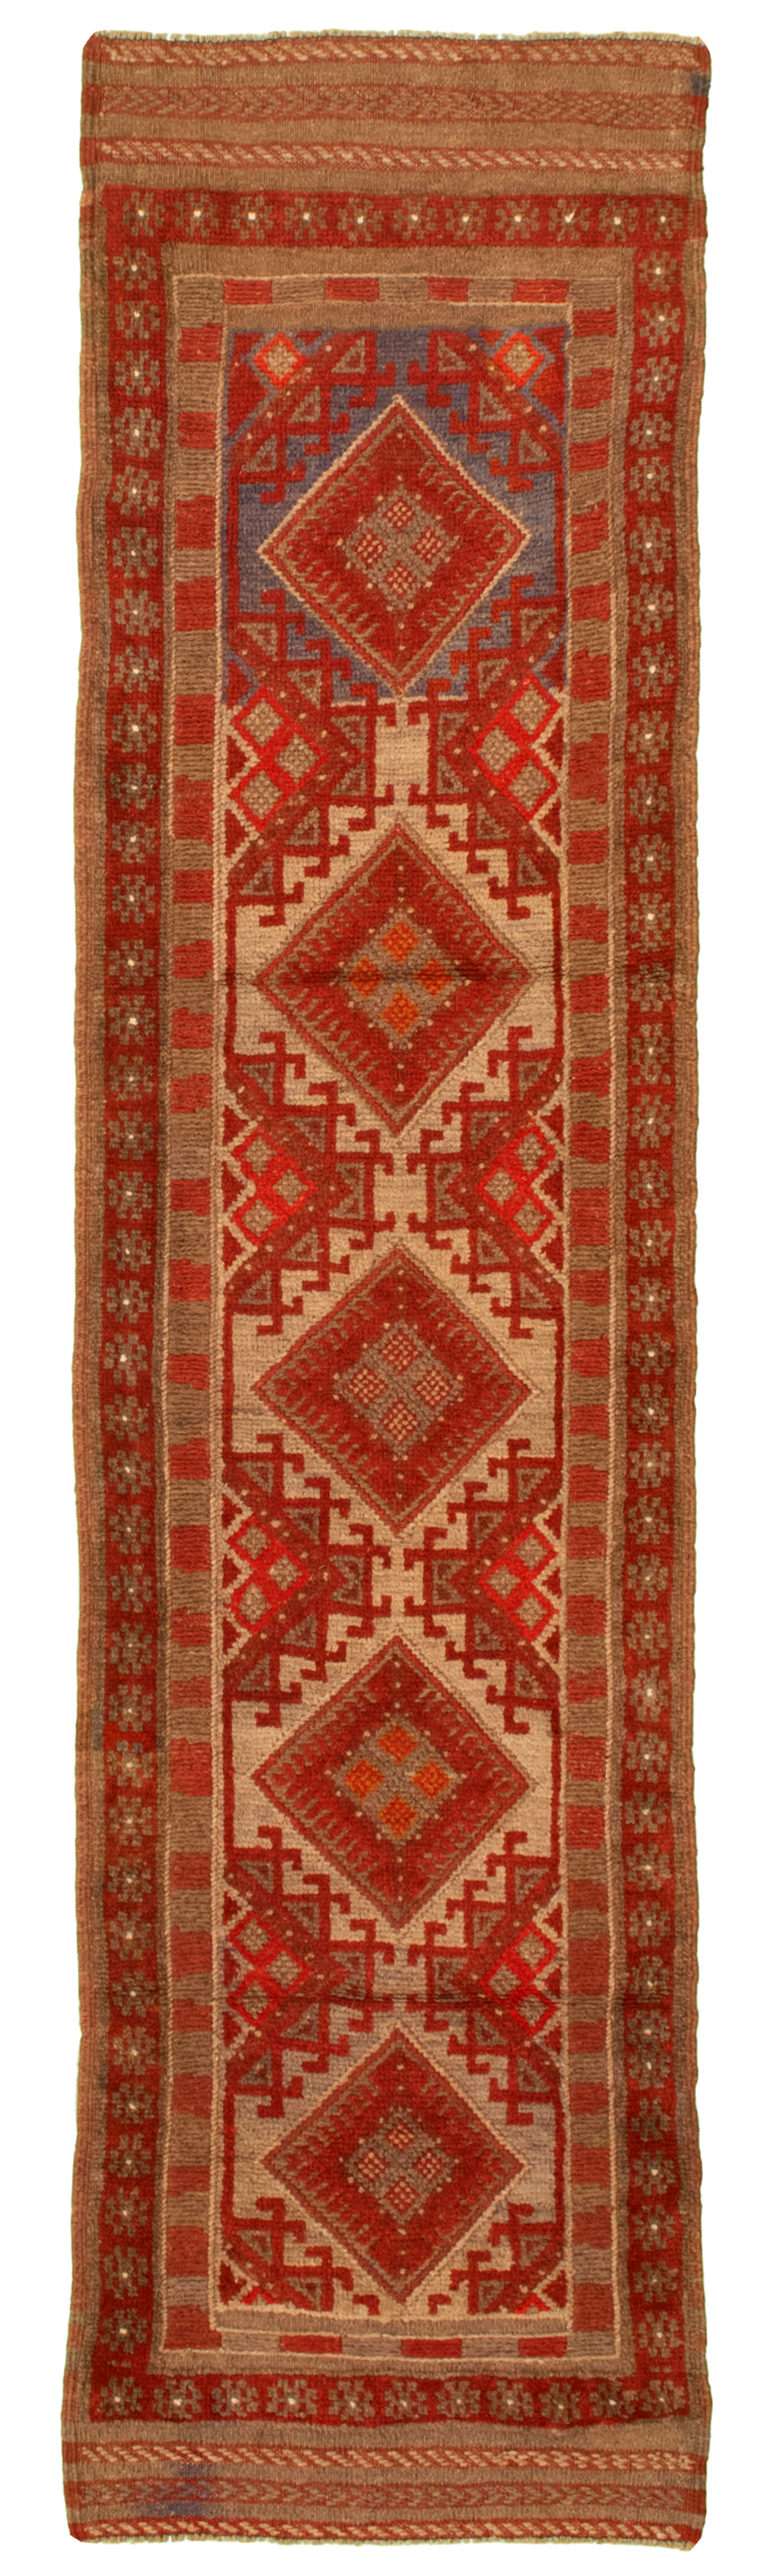 Hand-knotted Tajik Caucasian Red Wool Rug 2'0" x 8'4" (24) Size: 2'0" x 8'4"  